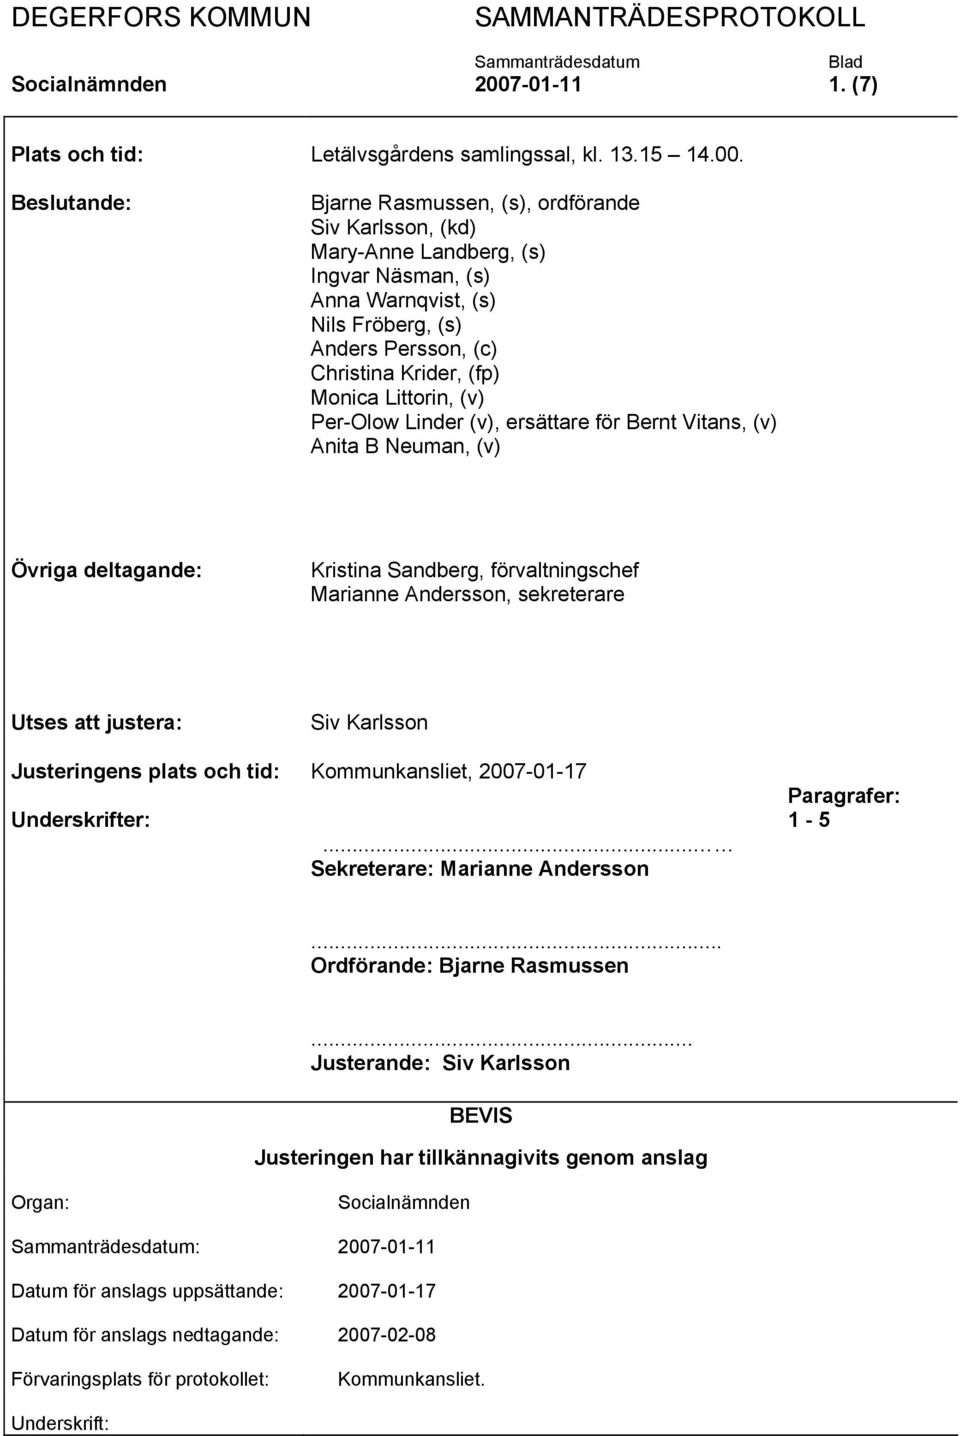 Beslutande: Bjarne Rasmussen, (s), ordförande Siv Karlsson, (kd) Mary-Anne Landberg, (s) Ingvar Näsman, (s) Anna Warnqvist, (s) Nils Fröberg, (s) Anders Persson, (c) Christina Krider, (fp) Monica